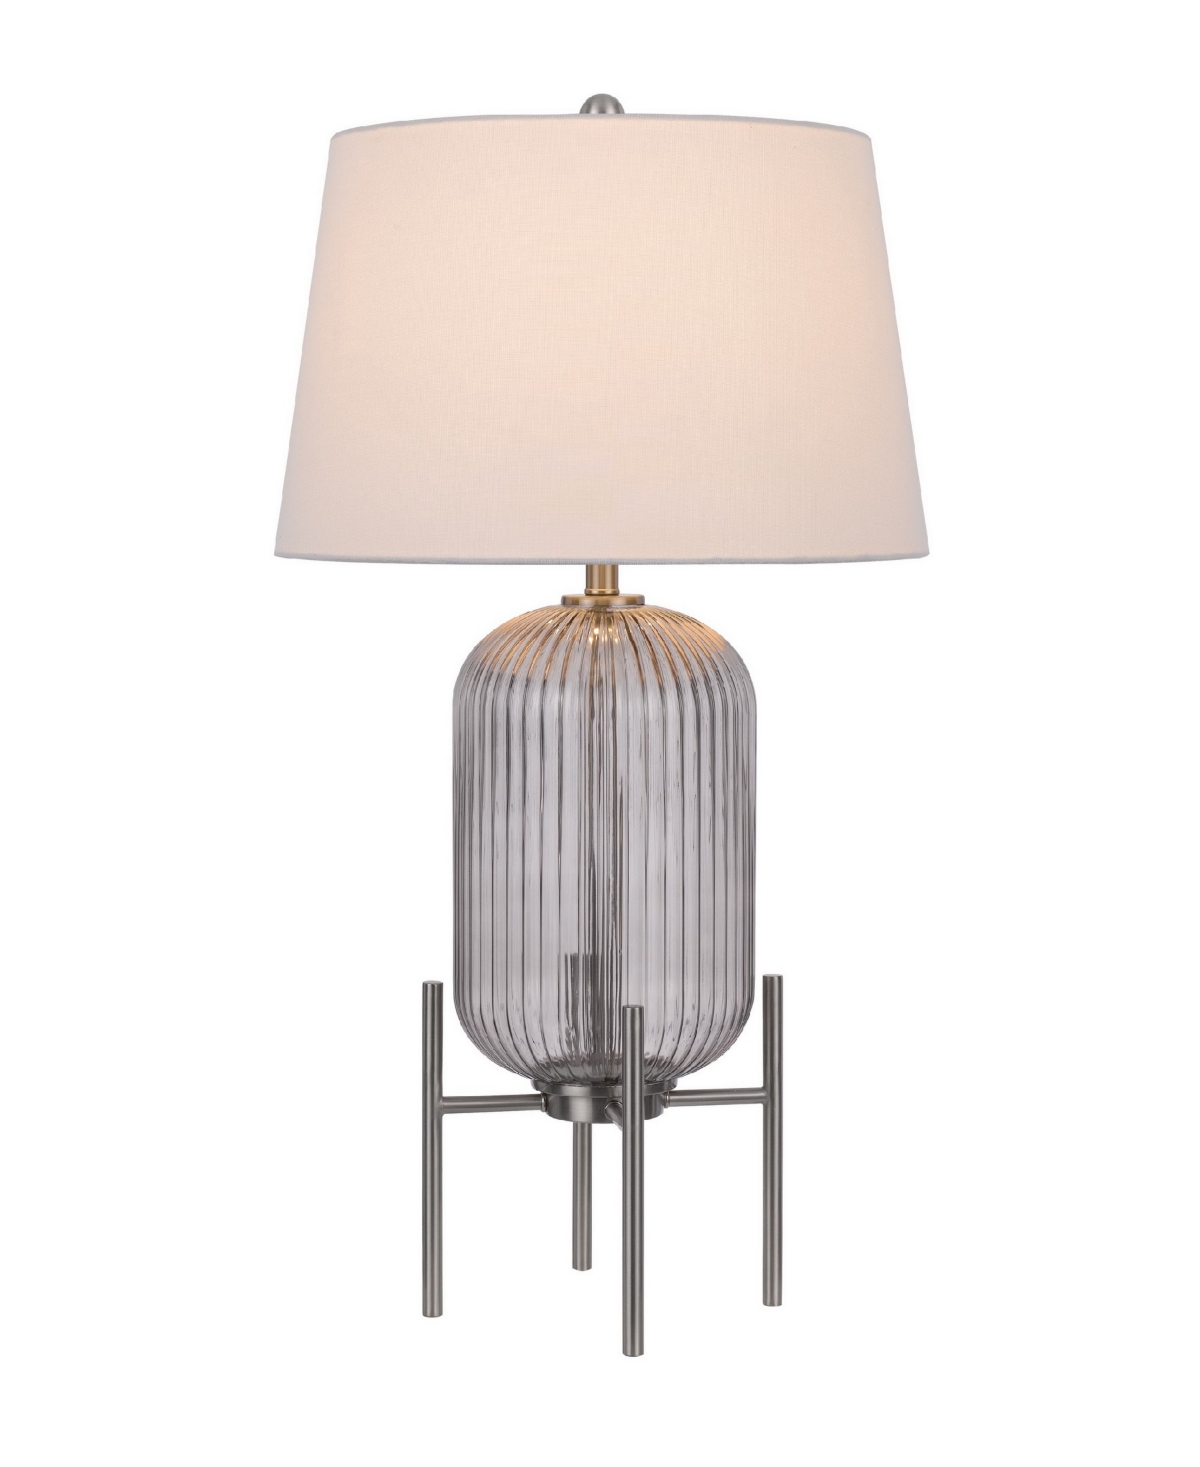 Shop Cal Lighting 32.5" Height Metal Table Lamp In Brushed Steel